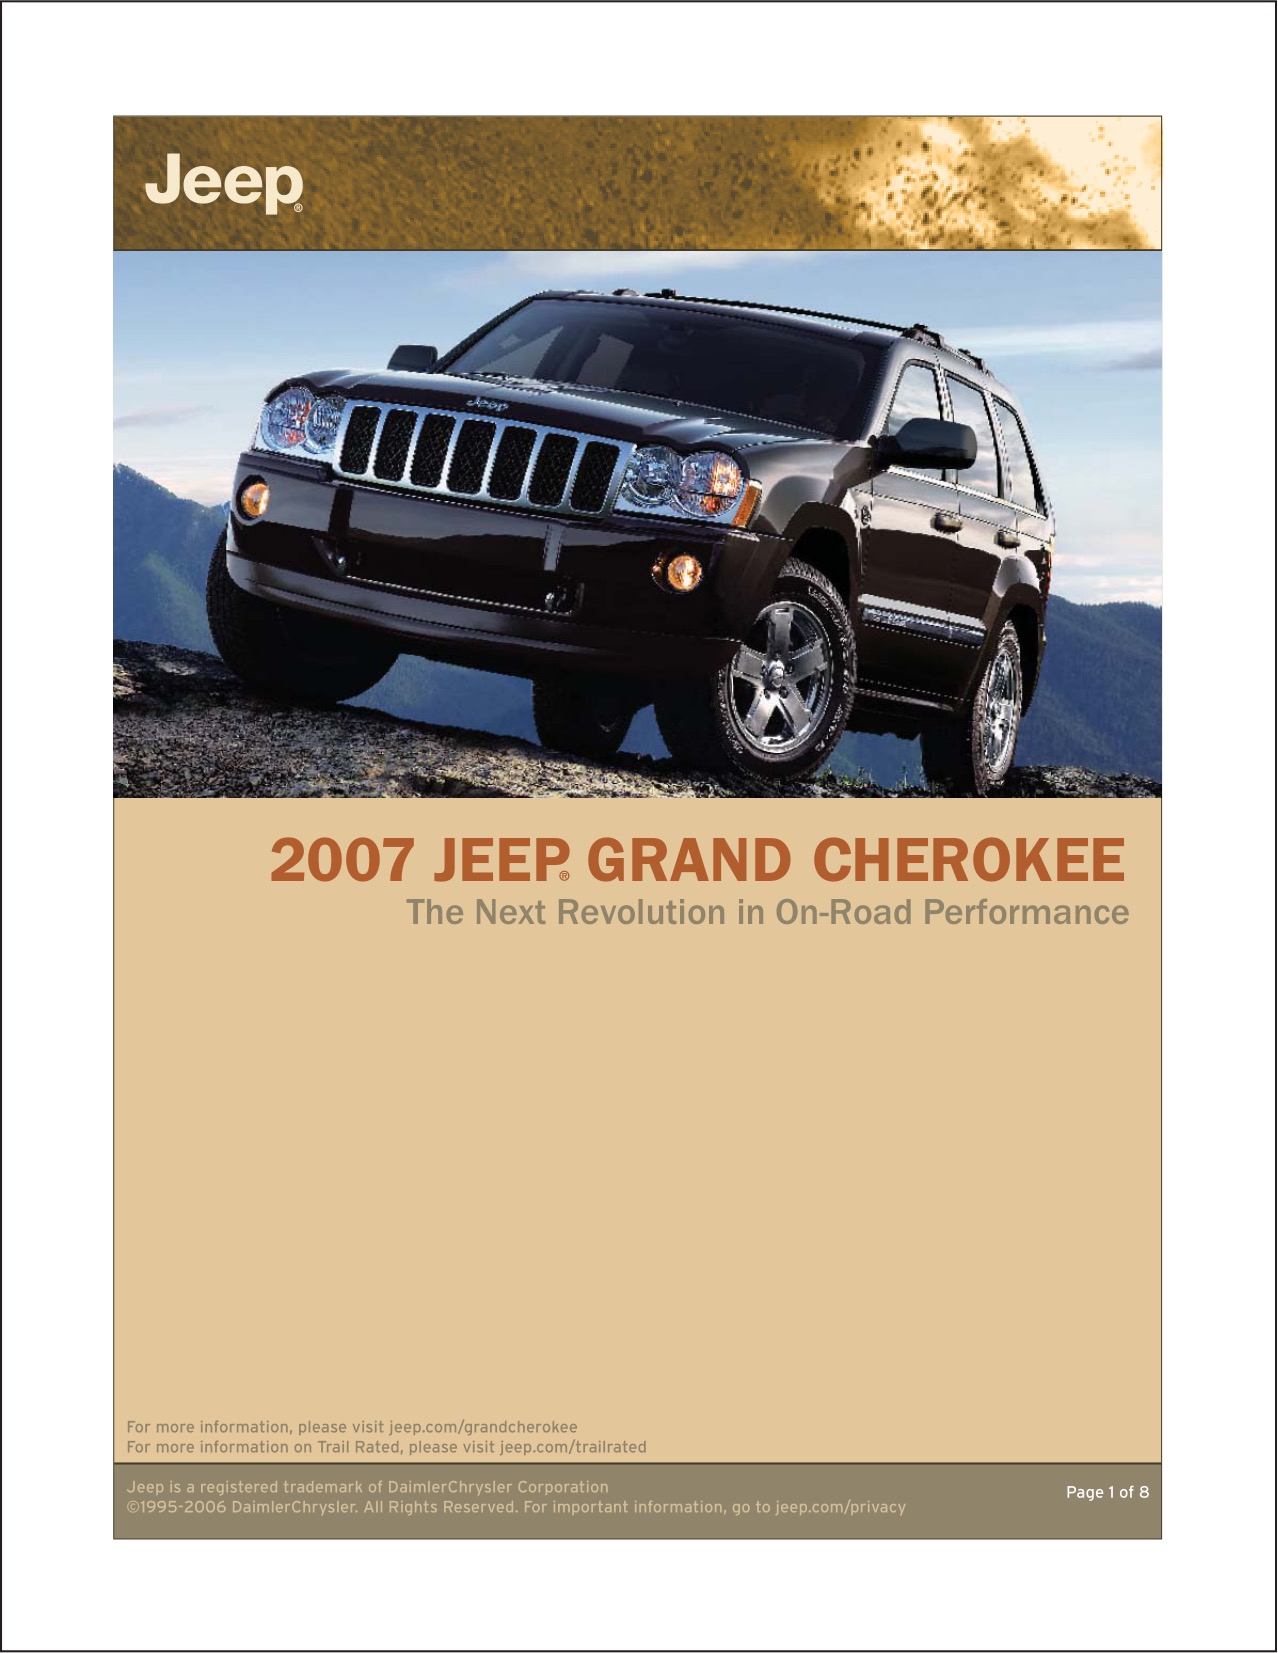 2007 Jeep Grand Cherokee Brochure